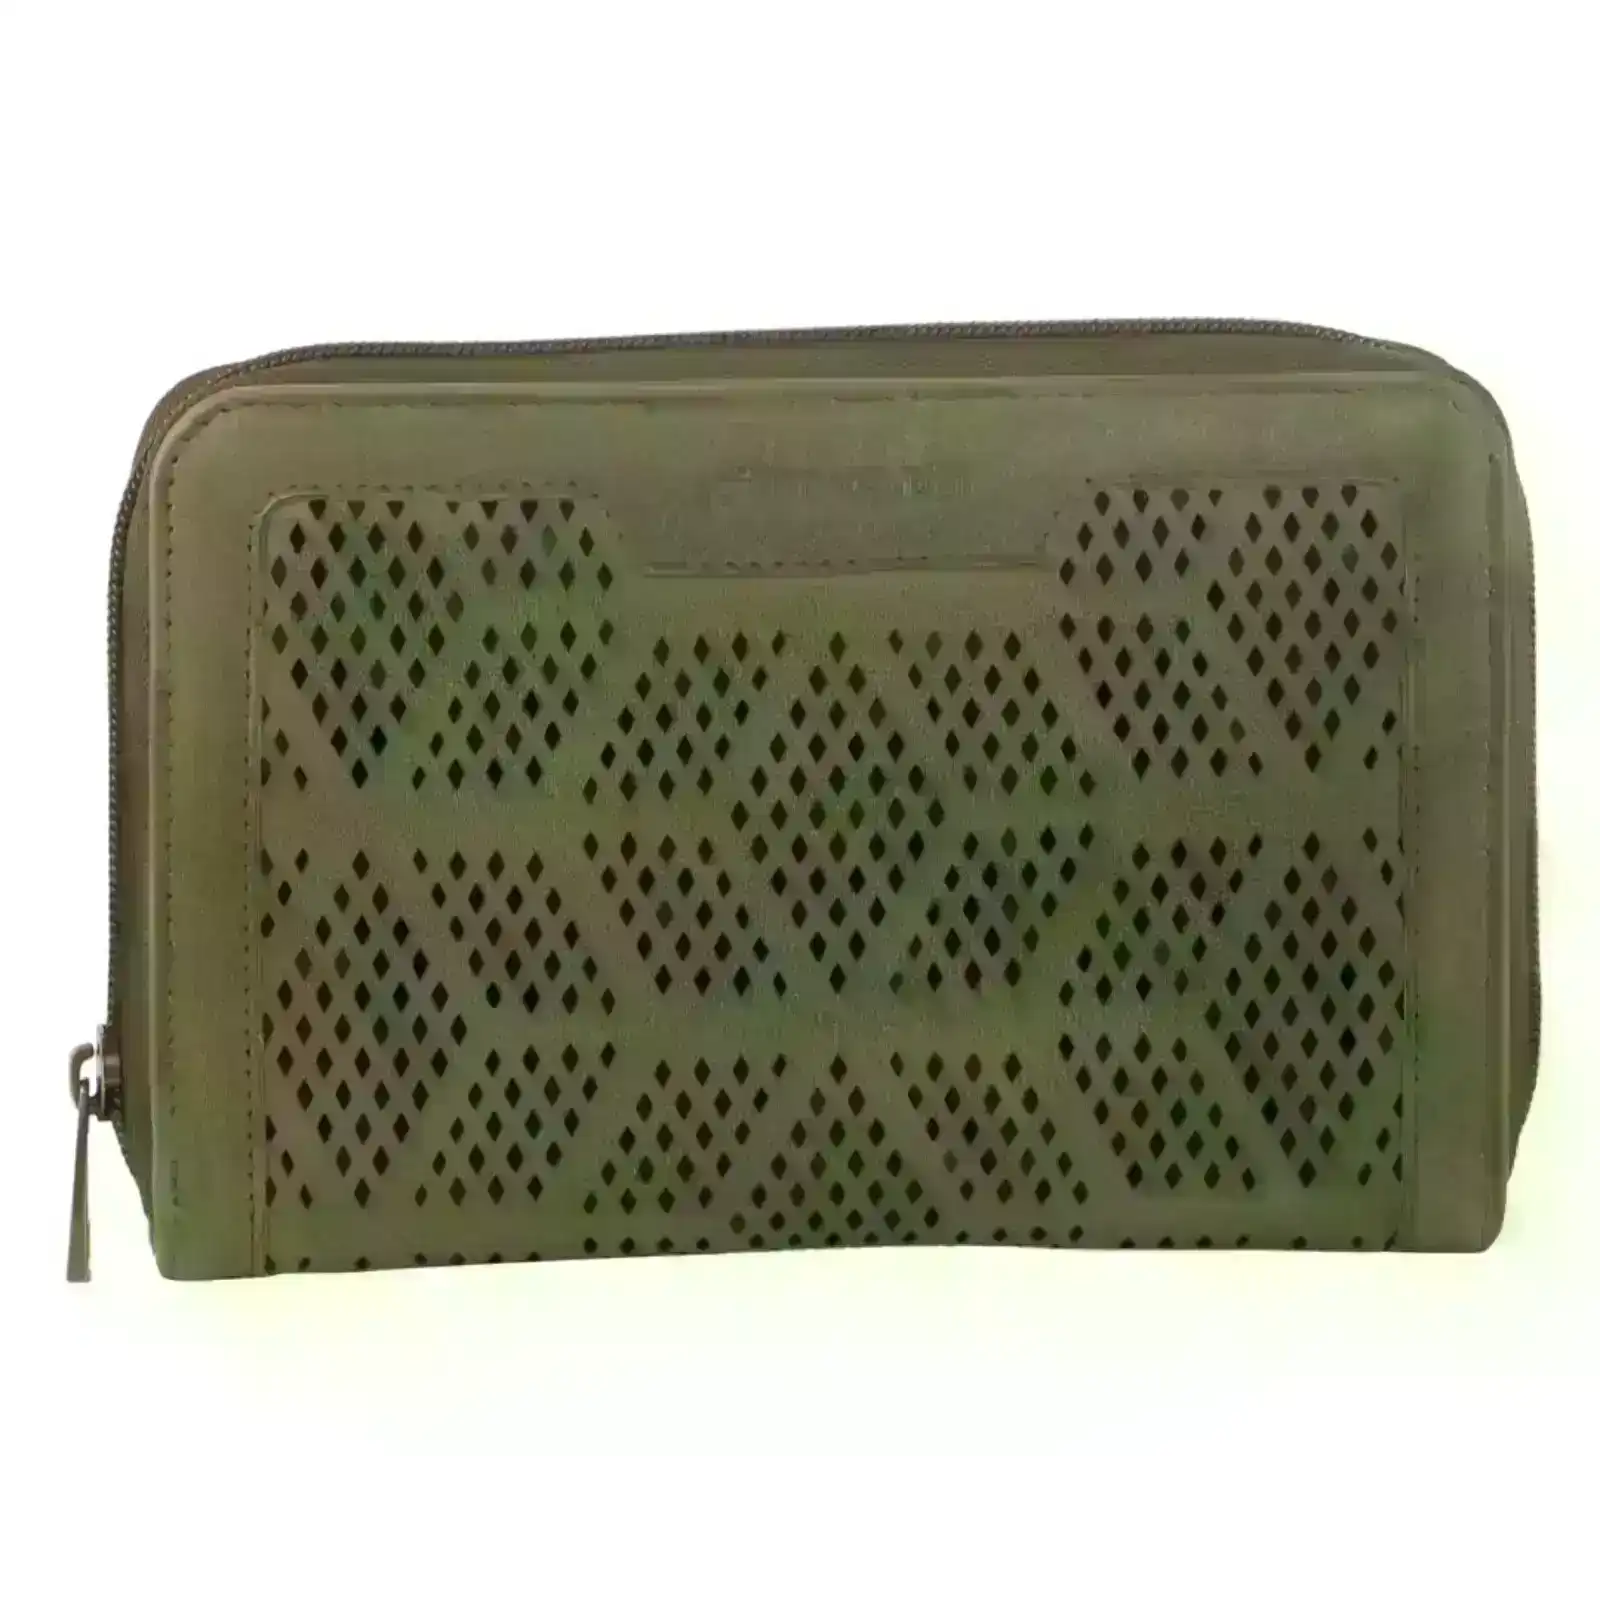 Pierre Cardin Perforated Leather Ladies Zip Around Wallet - Olive